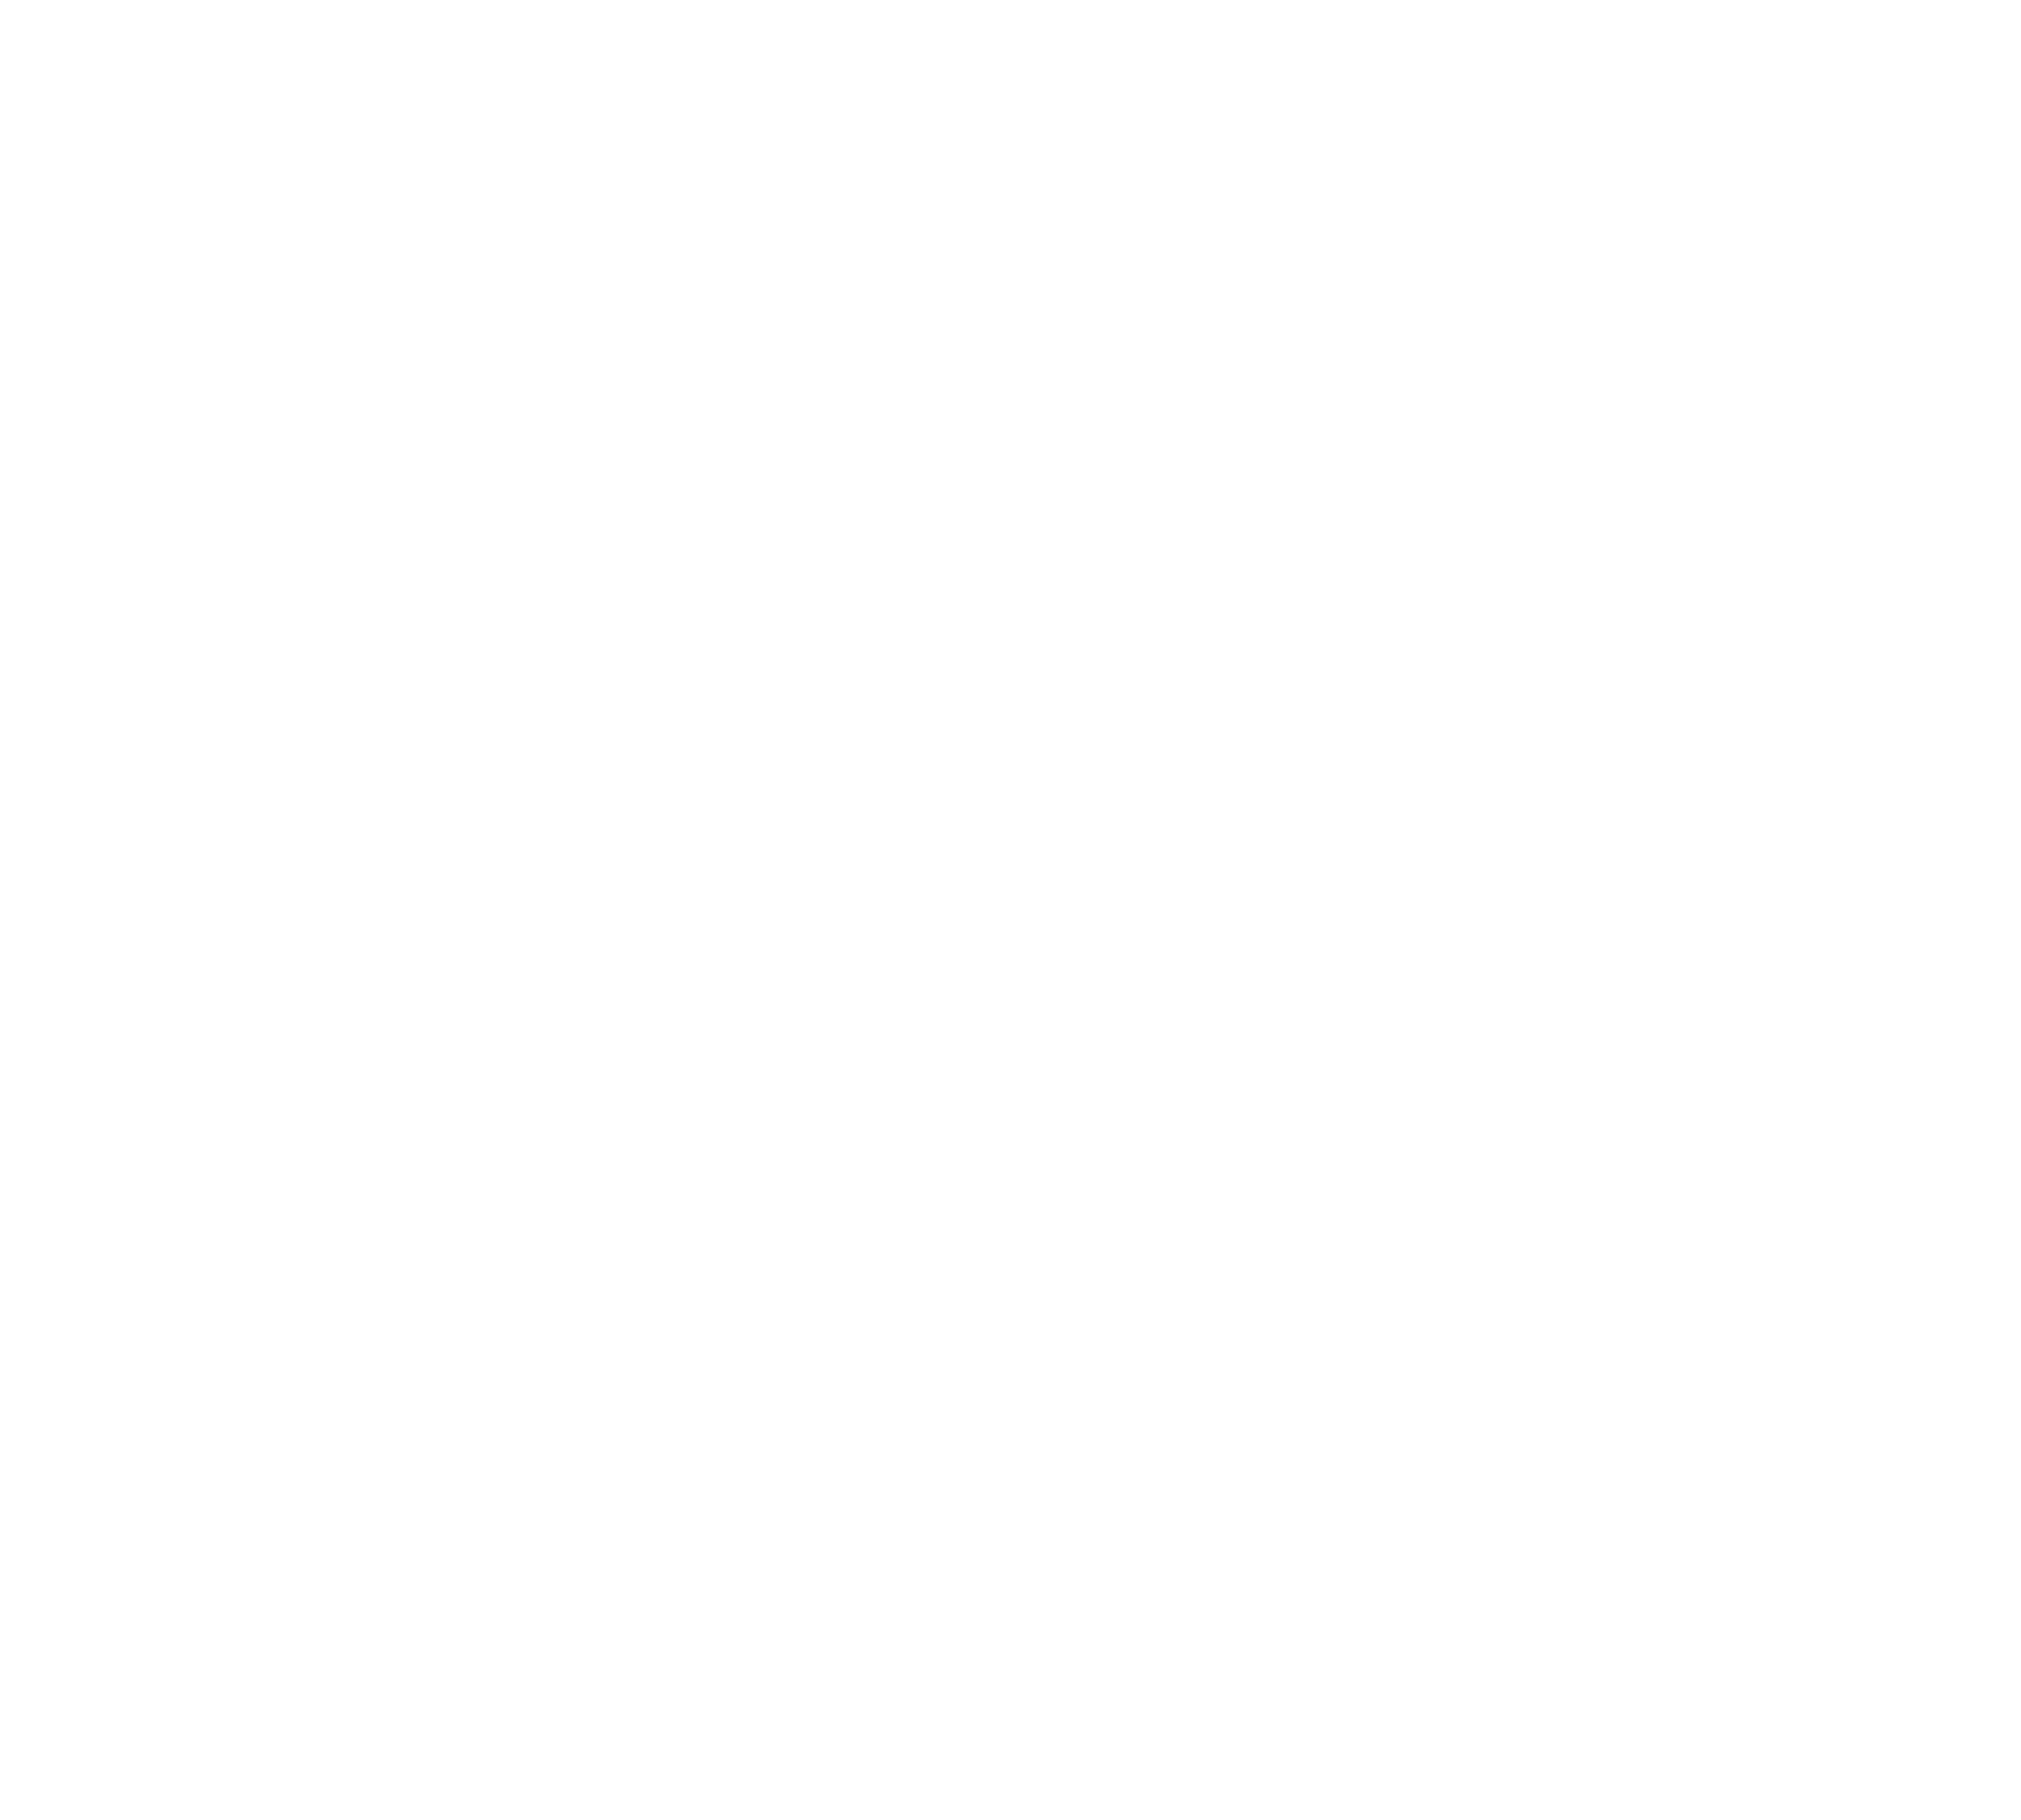 Camping du Roz